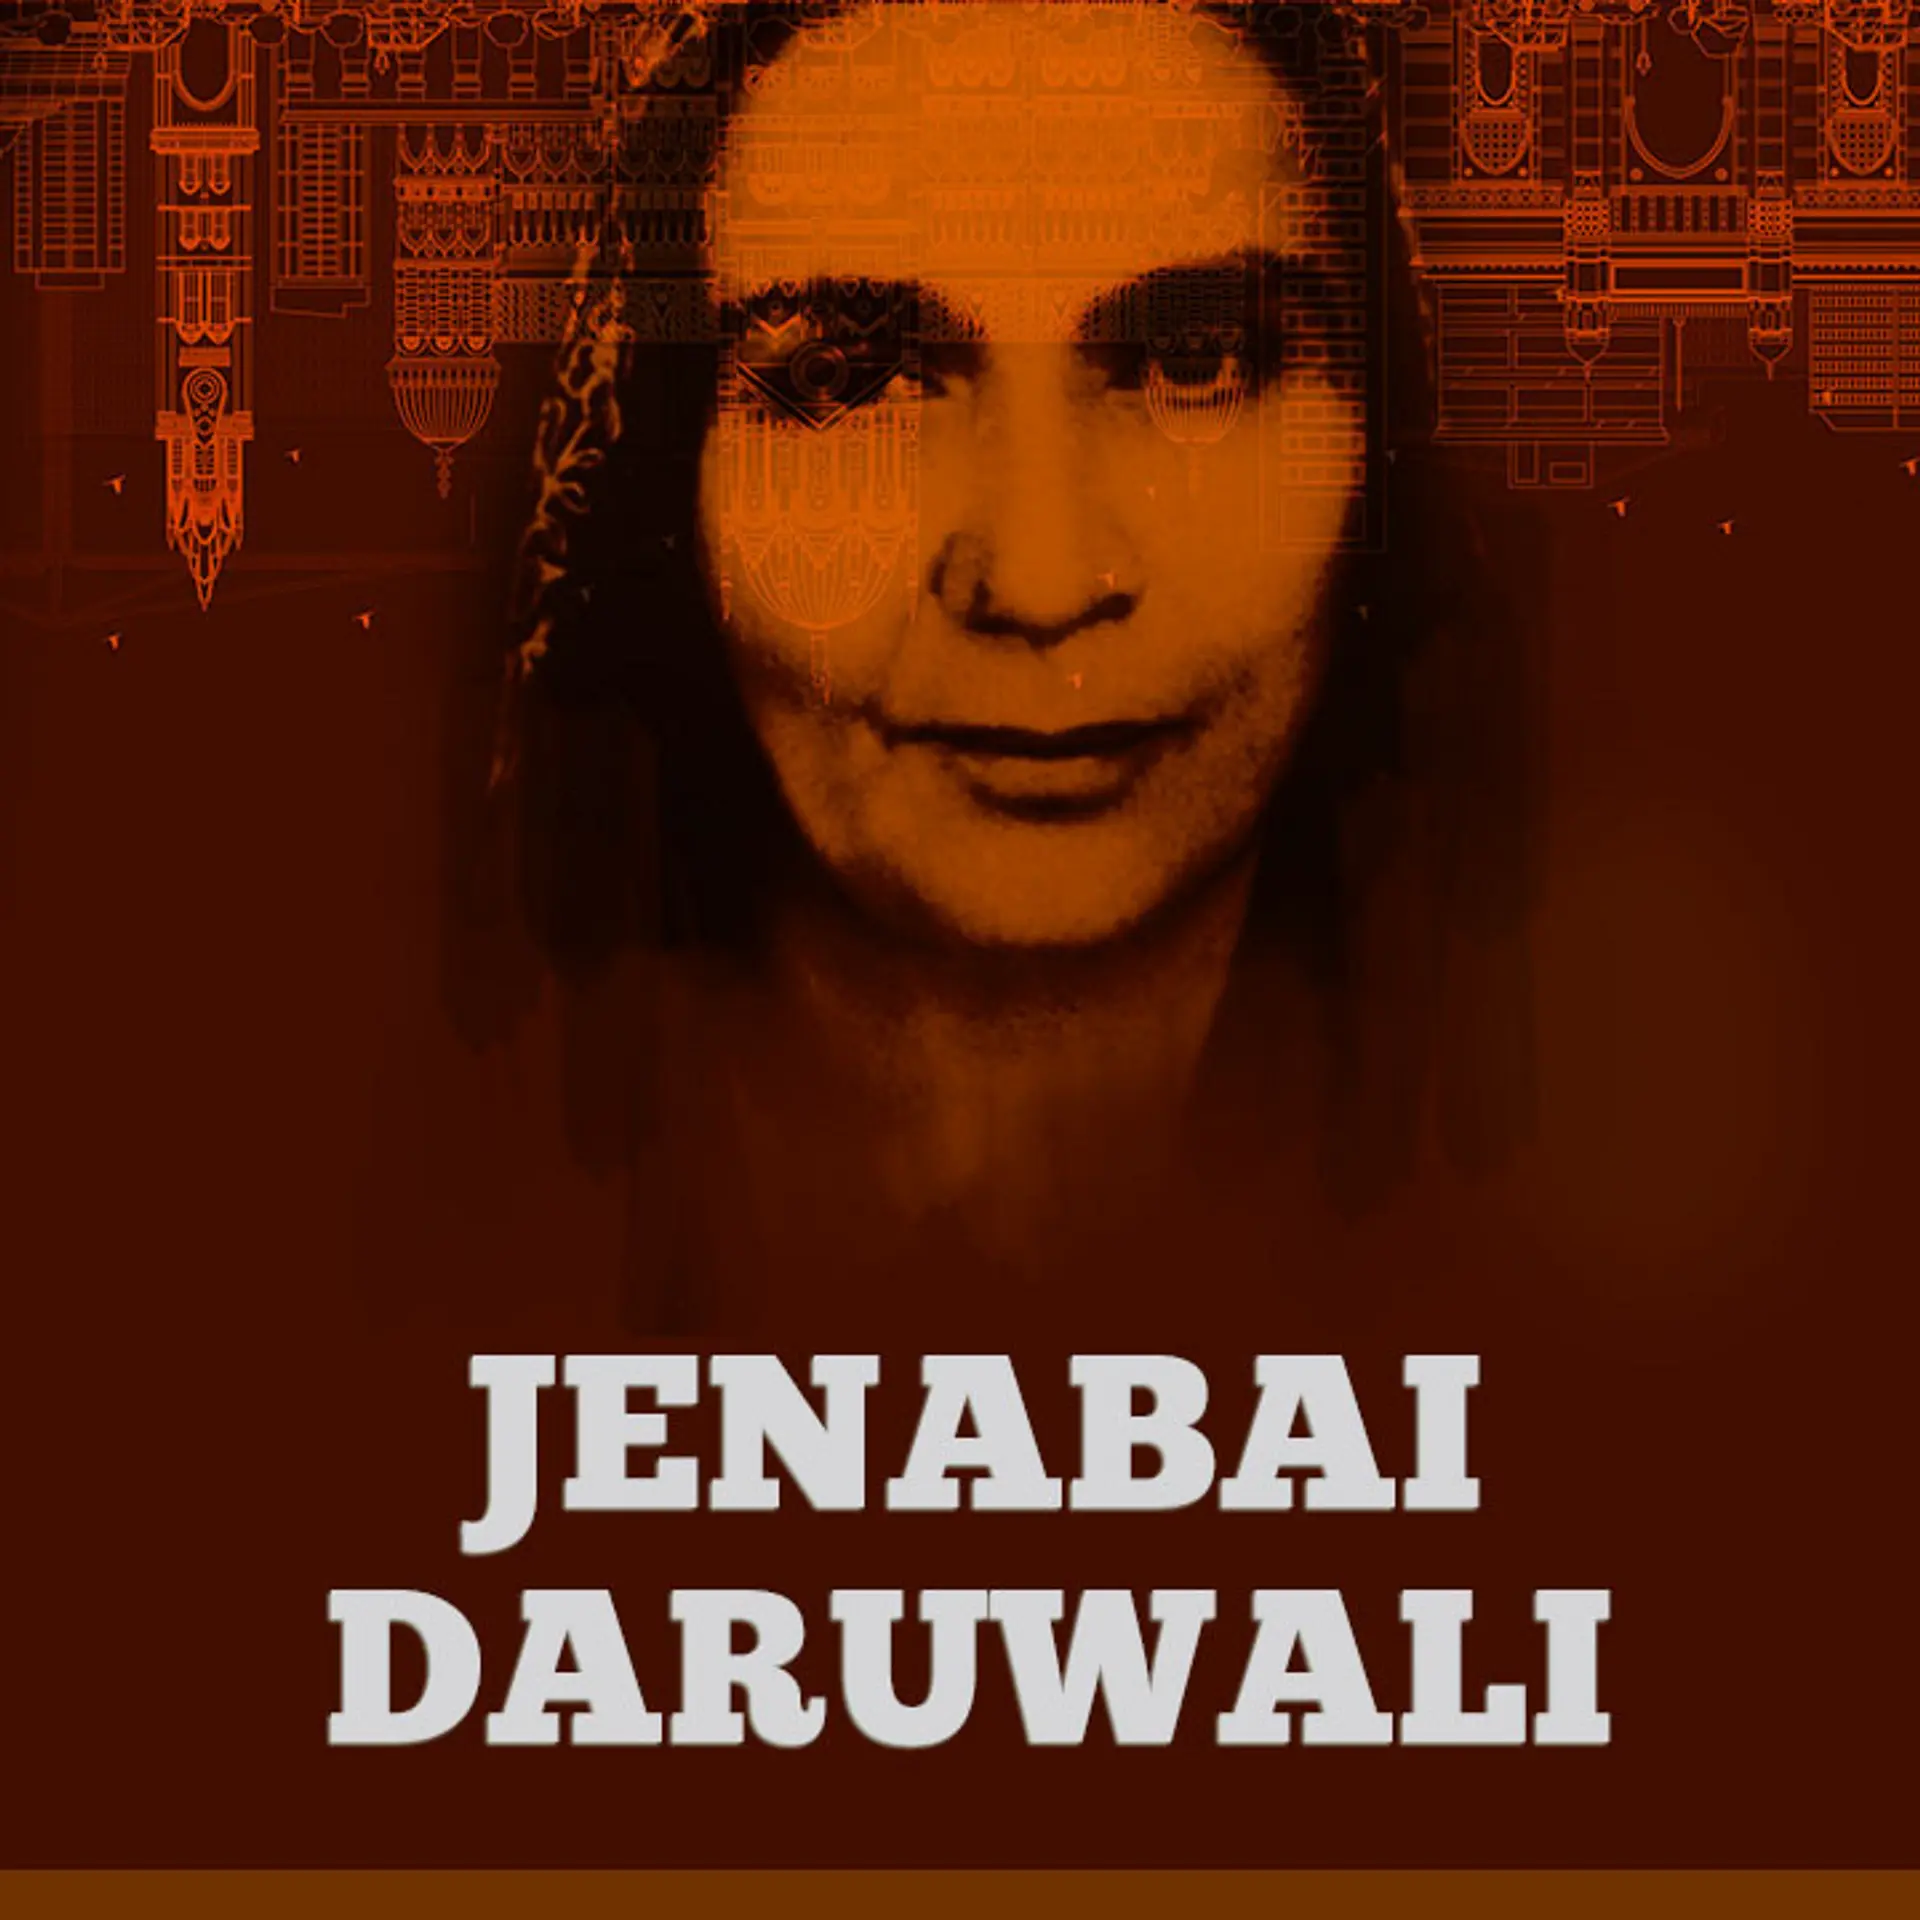 Jenabai Daruwali - First Mafia Queen of Mumbai | 